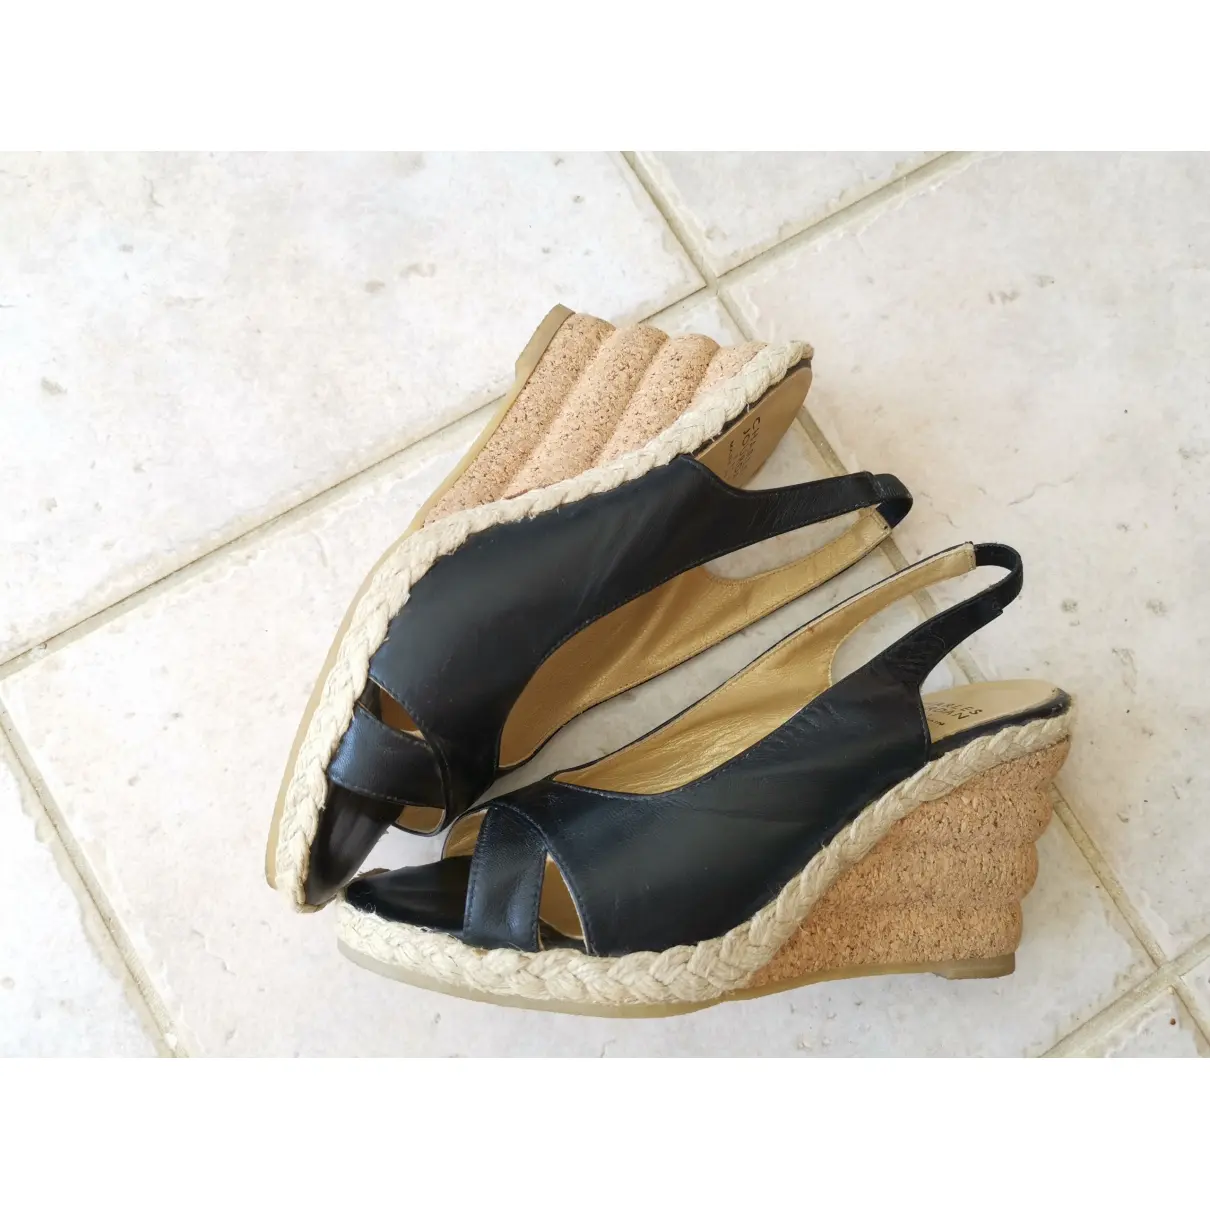 Buy Charles Jourdan Leather sandal online